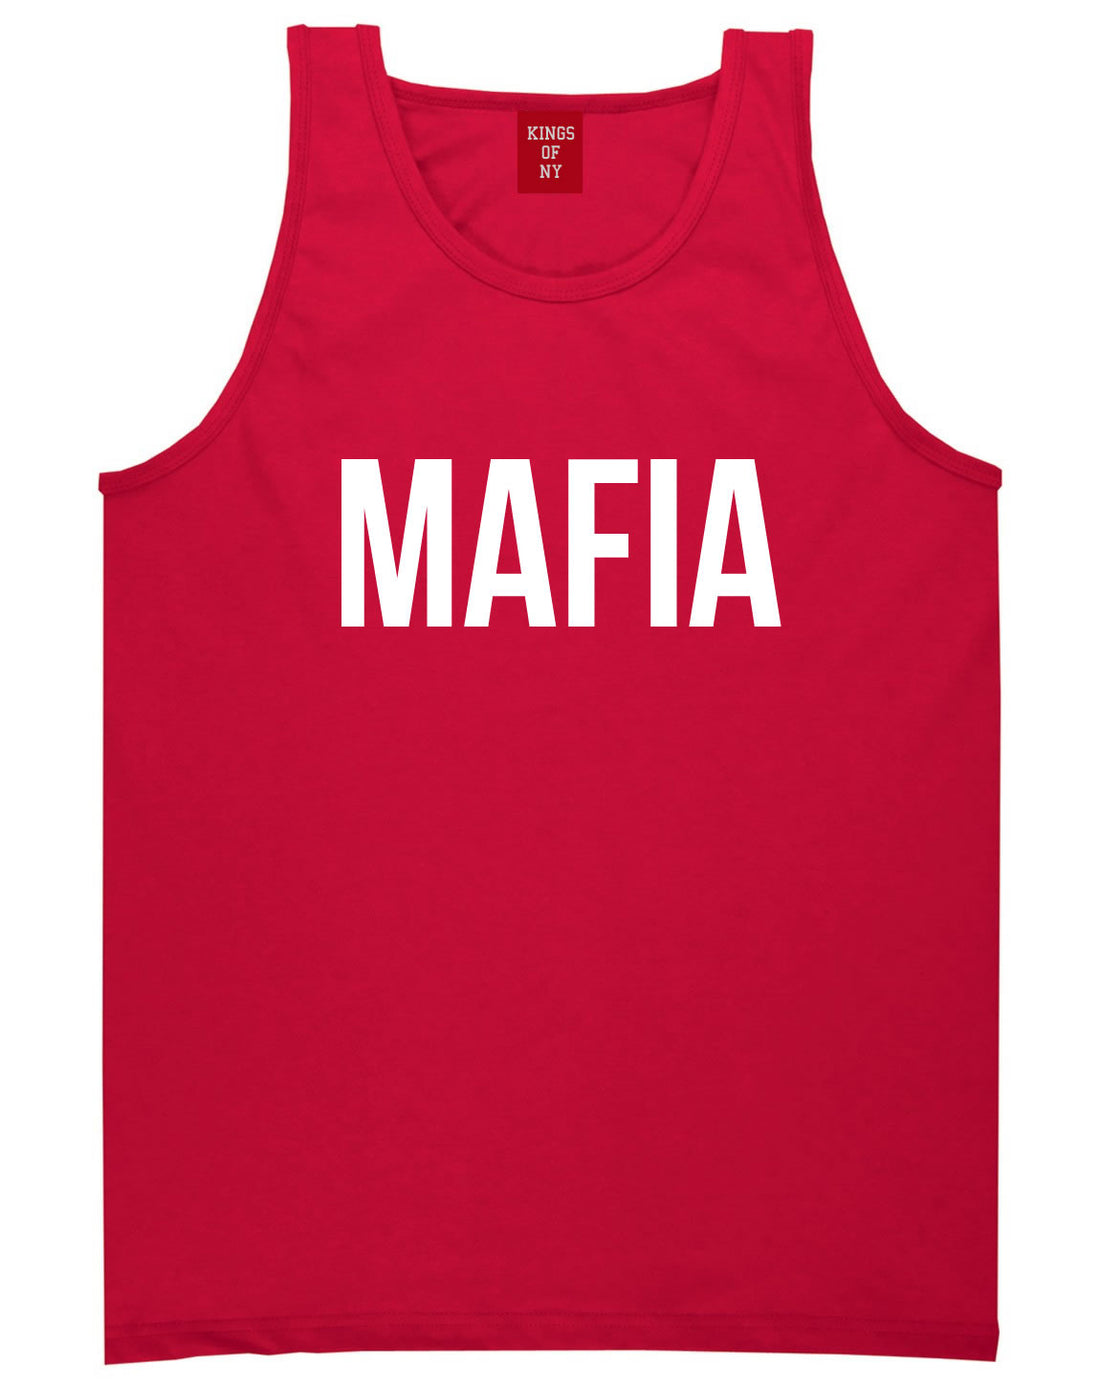 Mafia Junior Italian Mob  Tank Top in Red By Kings Of NY